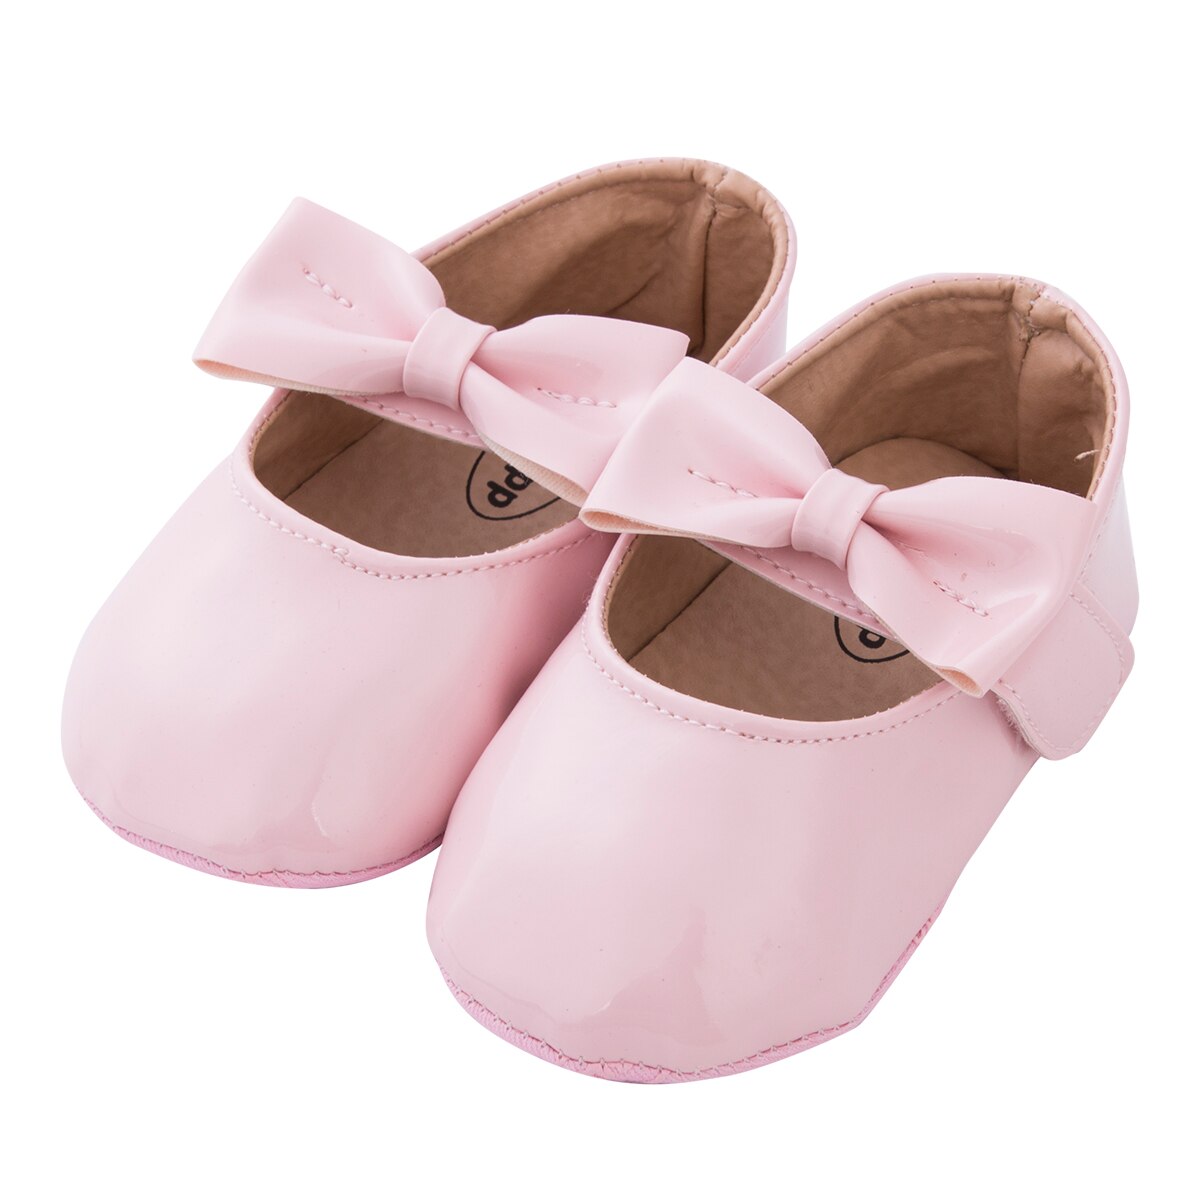 Infant Baby Girl Glitter Crib Shoes Anti-slip Soft Sole Prewalker Sneakers: D / 0-6 Months